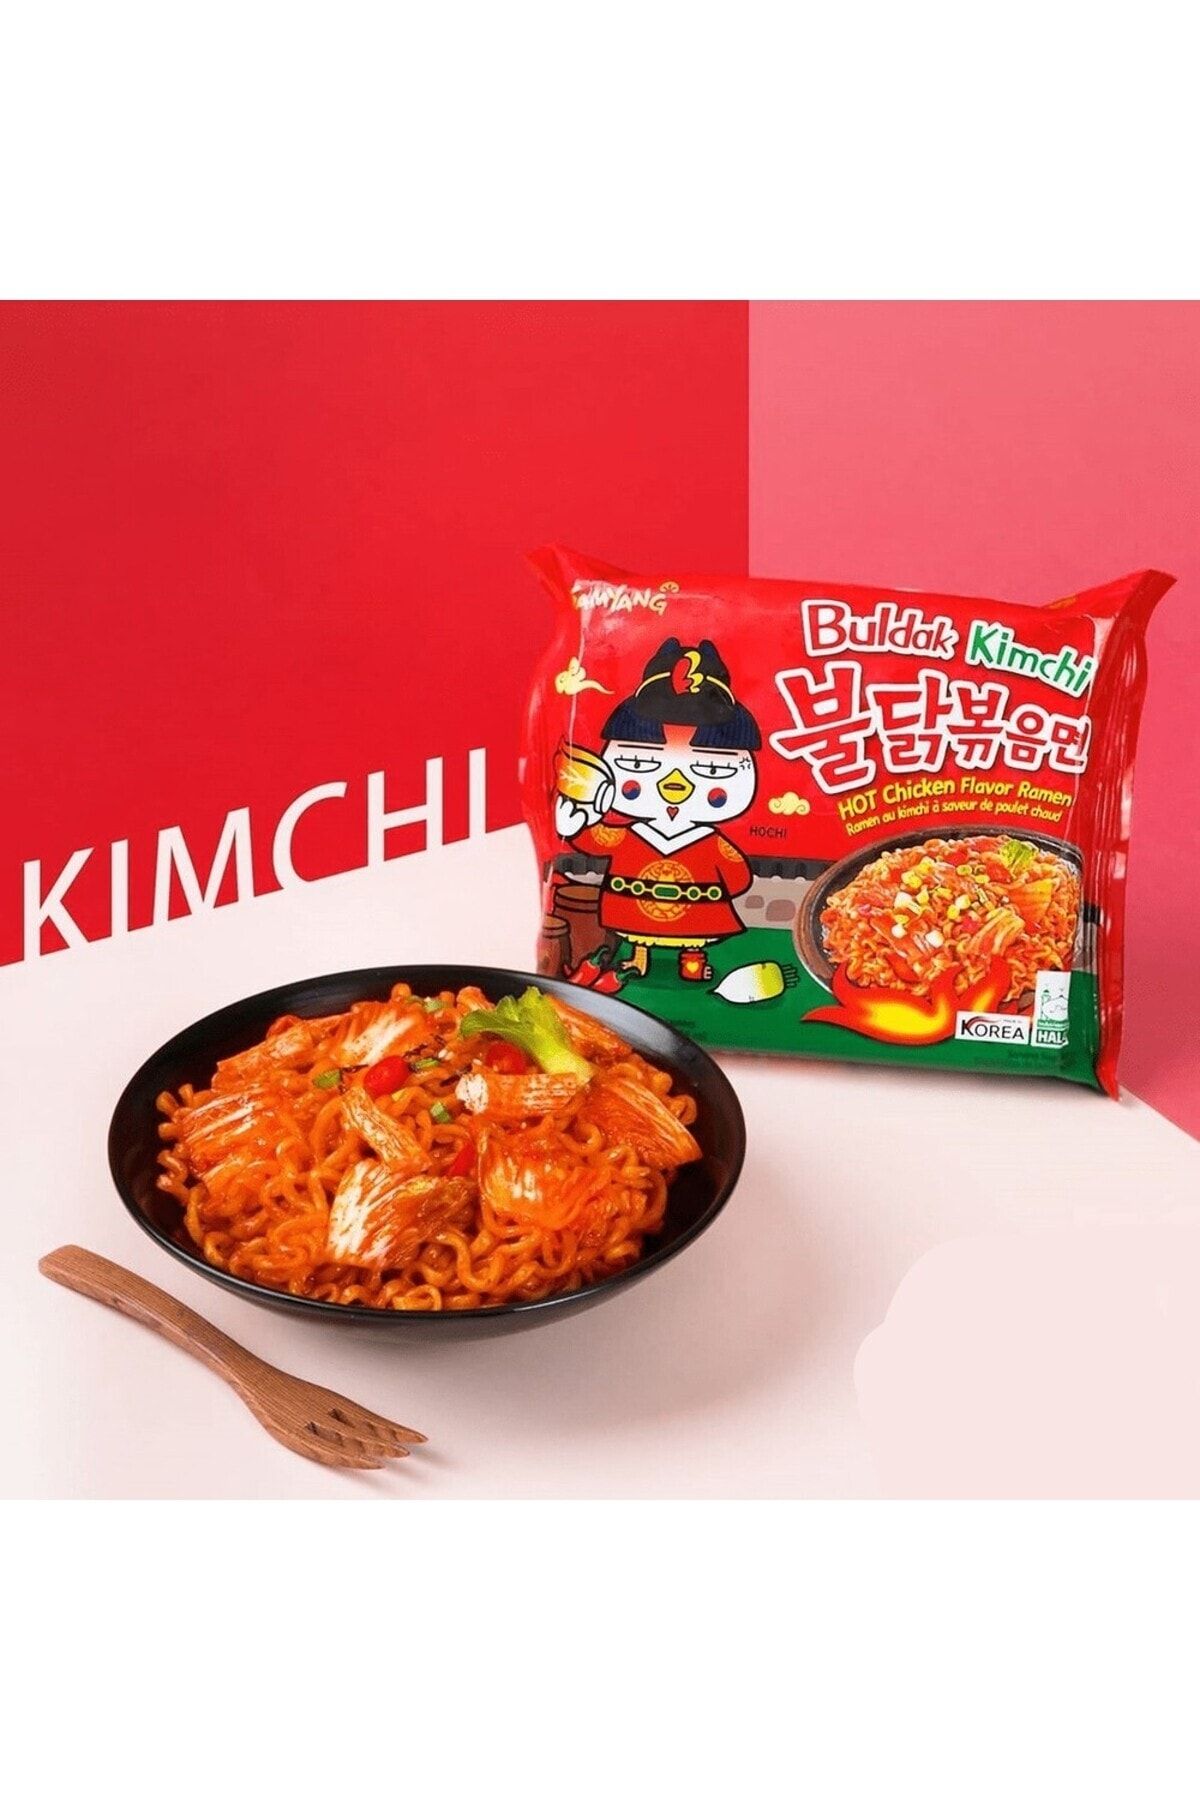 samyang Buldak Kimchi Hot Chicken Flavor Ramen,140g (amerikan Cheetos Hediyeli )